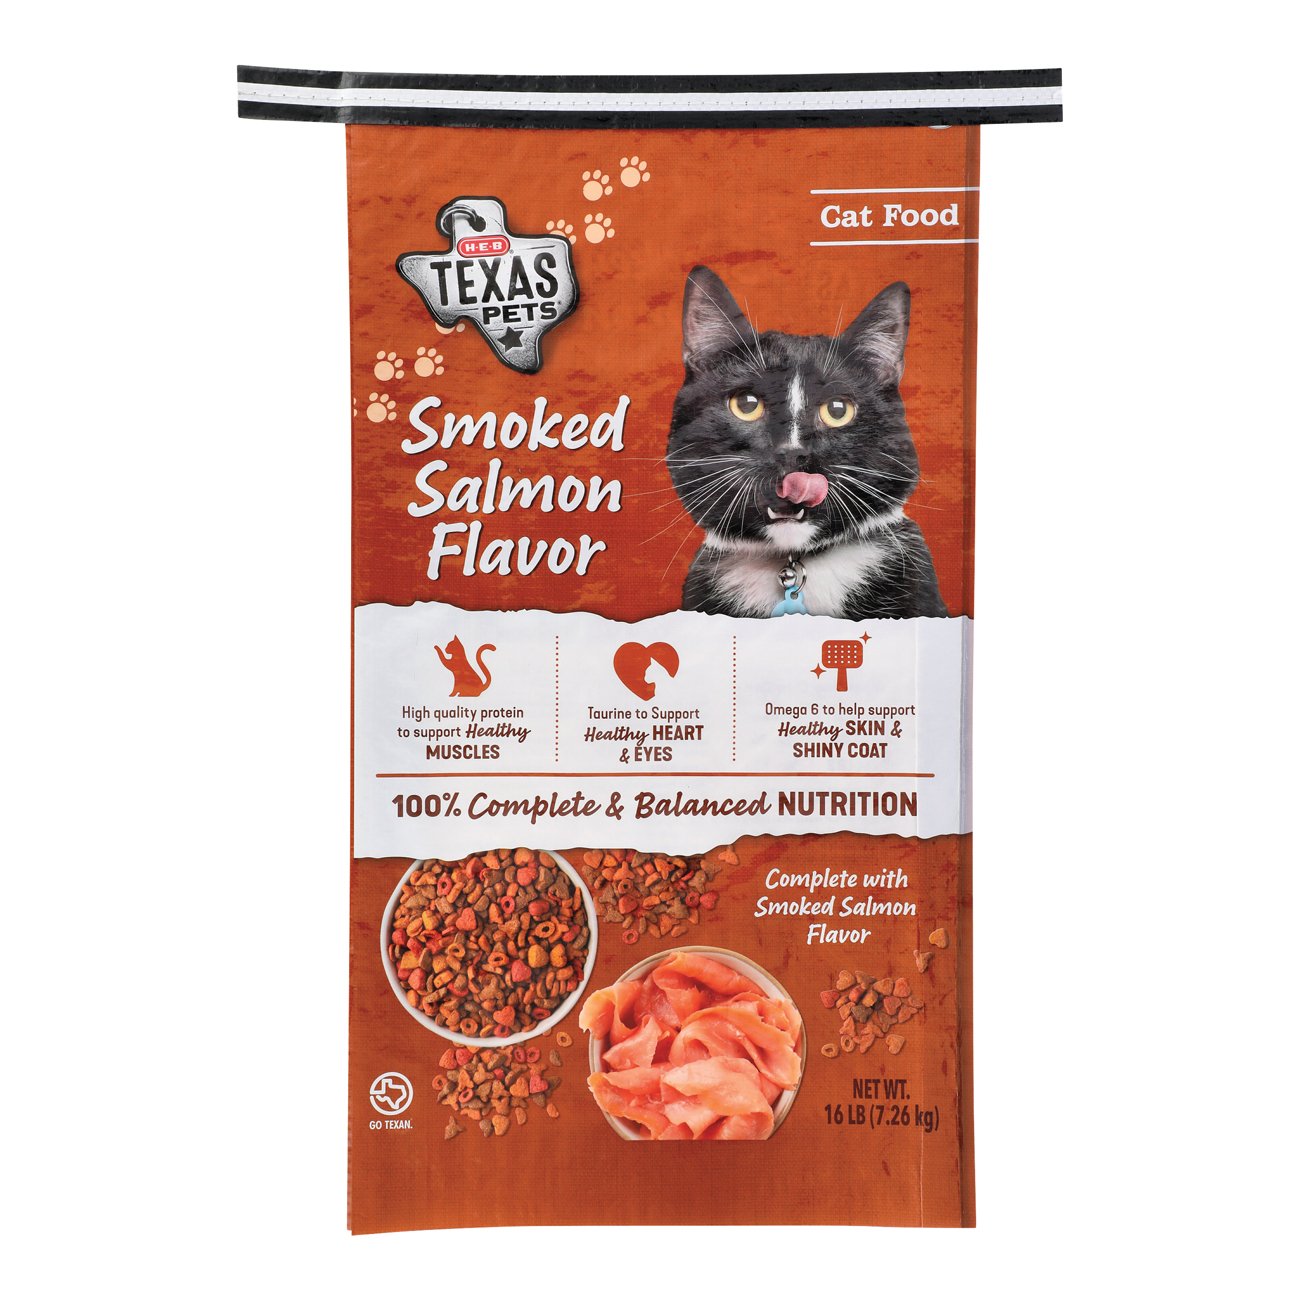 companion cat food